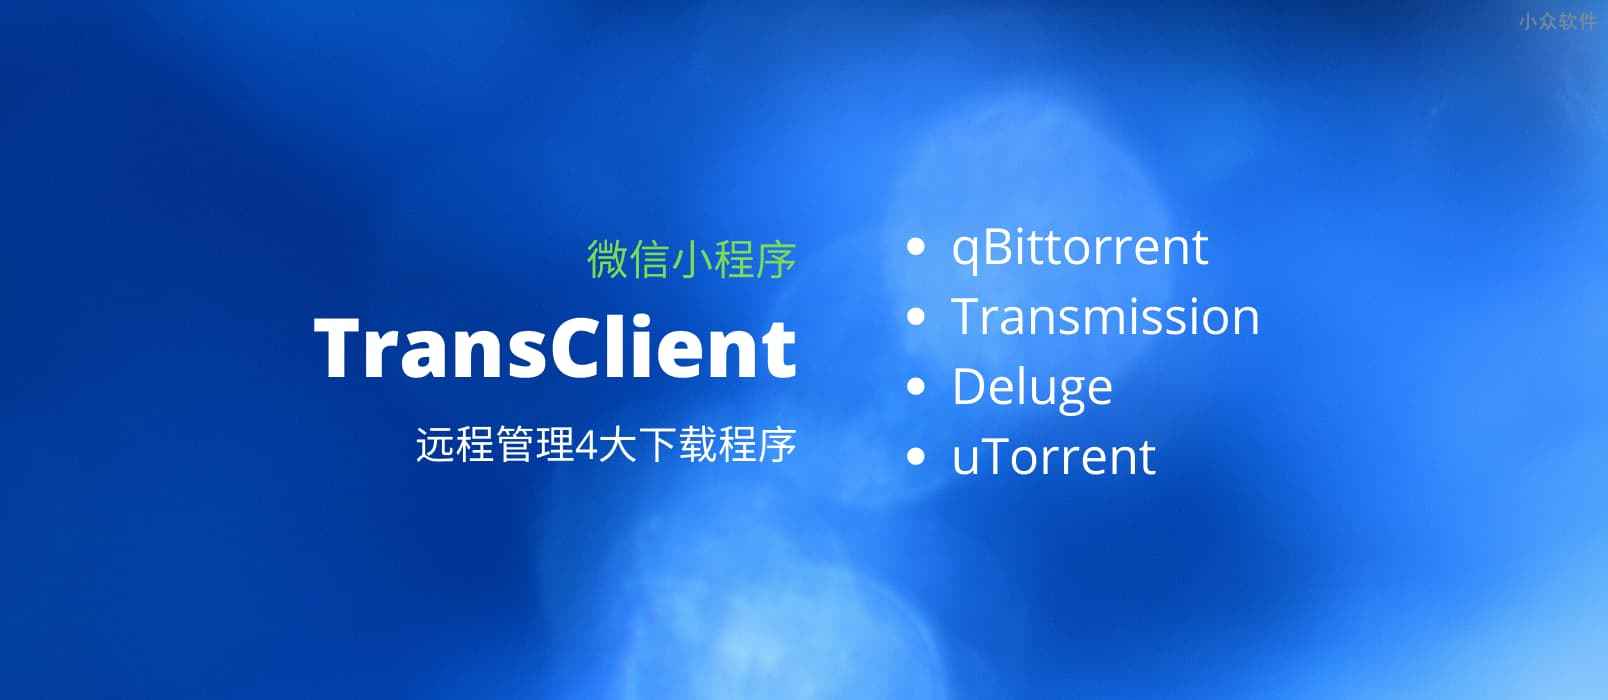 TransClient – 远程管理  qBittorrent、Transmission、Deluge、uTorrent 4大下载工具[微信小程序]